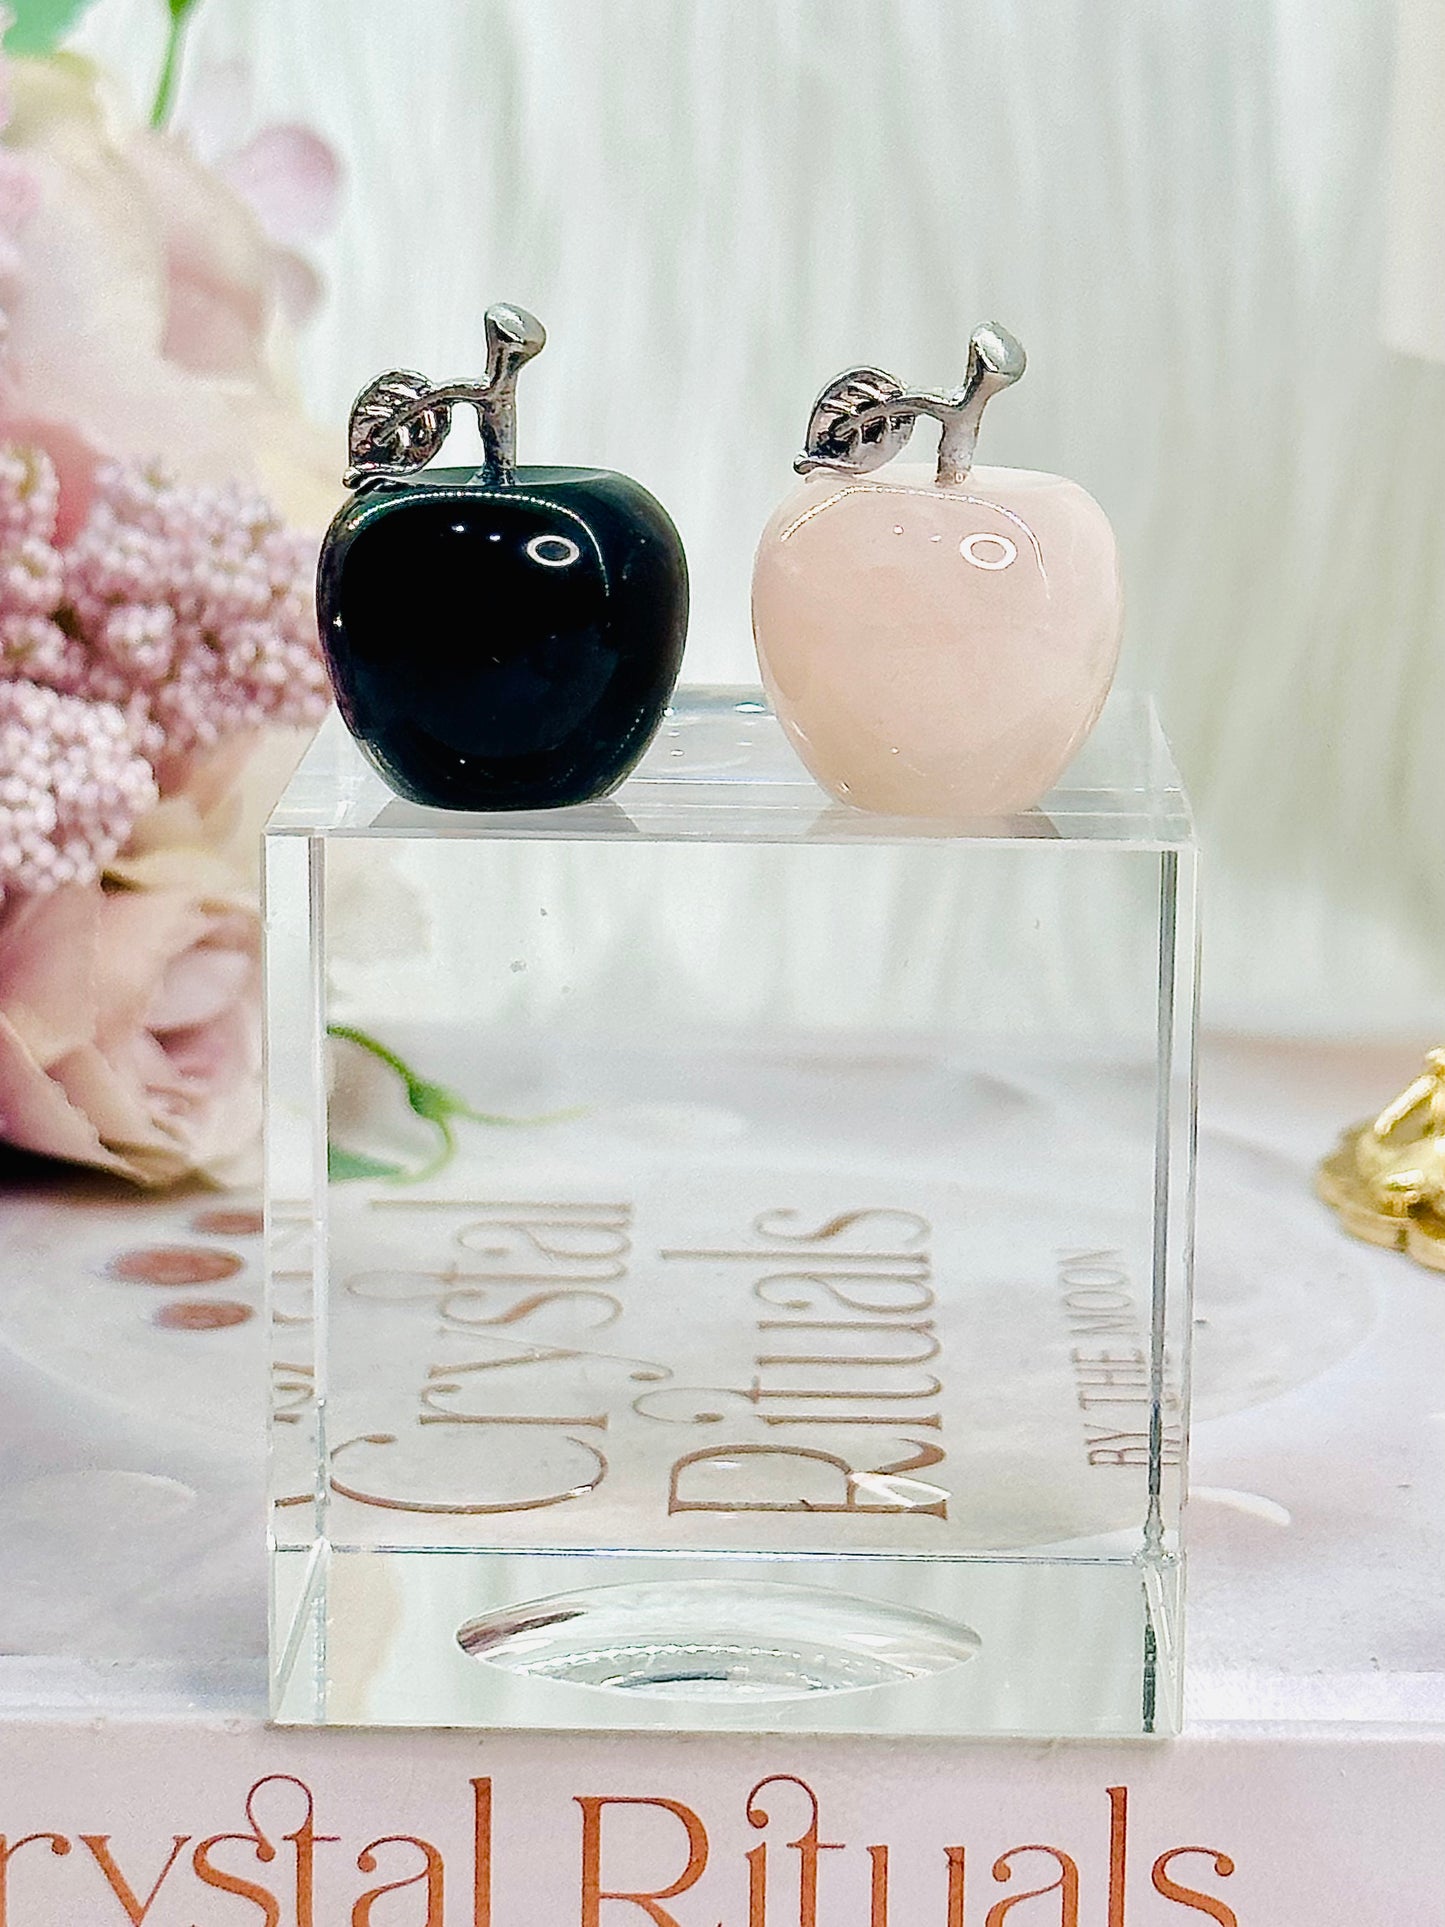 Beautiful Set of 2 Mini Apples ~ Black Obsidian & Rose Quartz